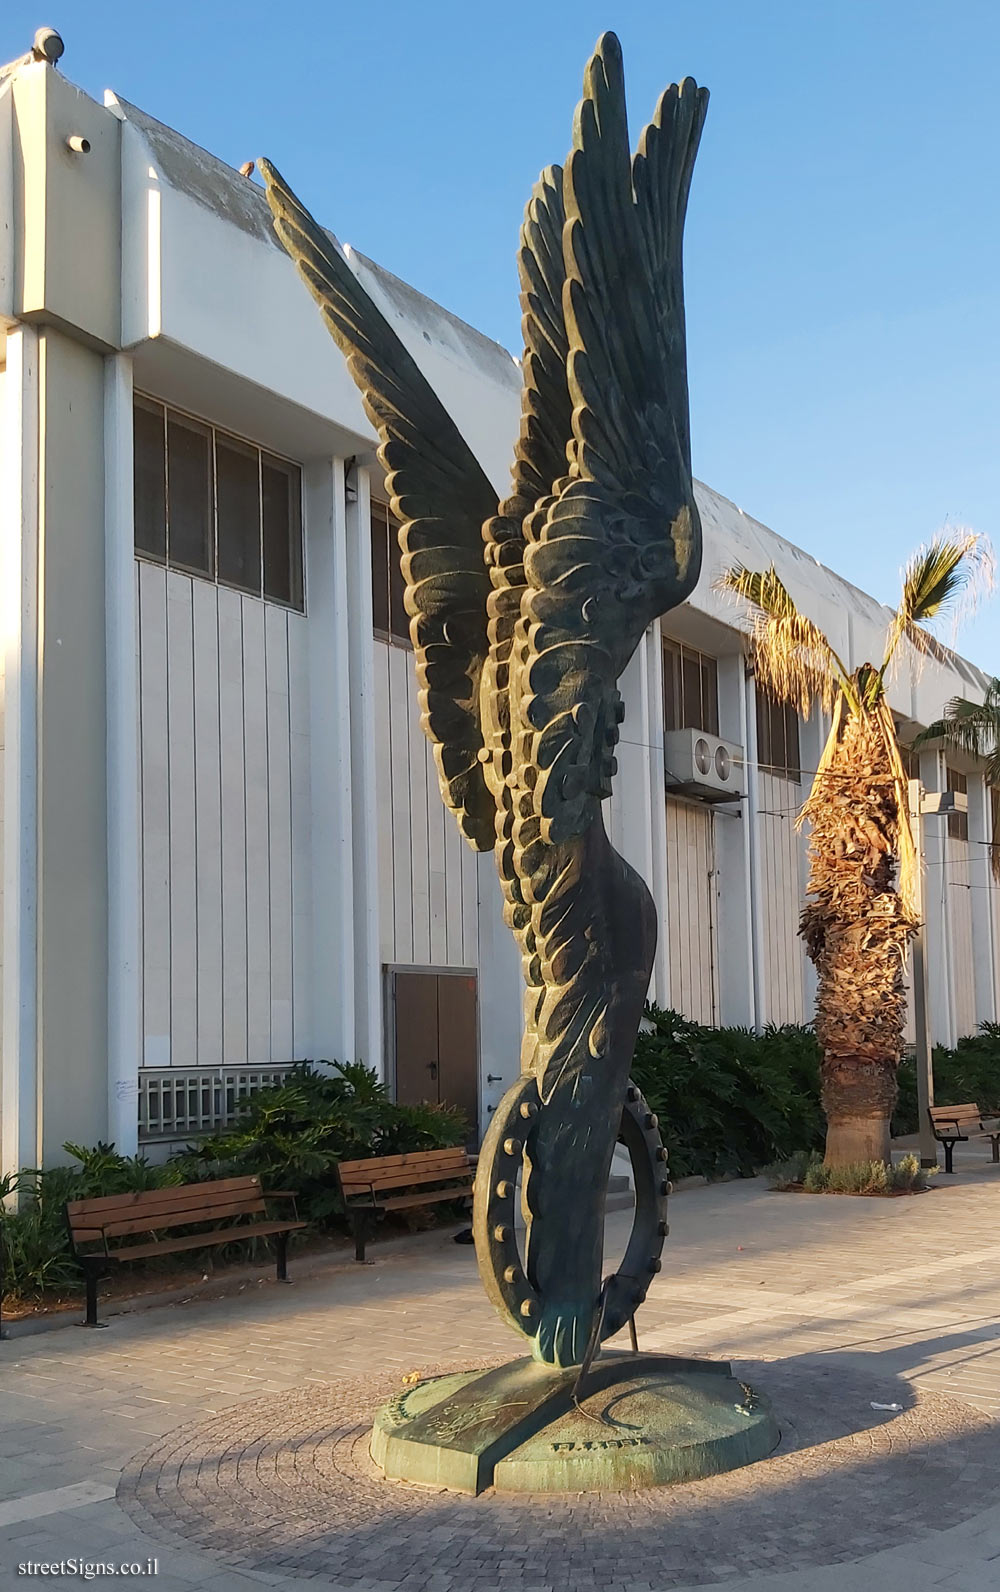 Tel Aviv - "Angel of Peace" outdoor sculpture by Motti Mizrachi - Yamin St 4, Tel Aviv-Yafo, Israel